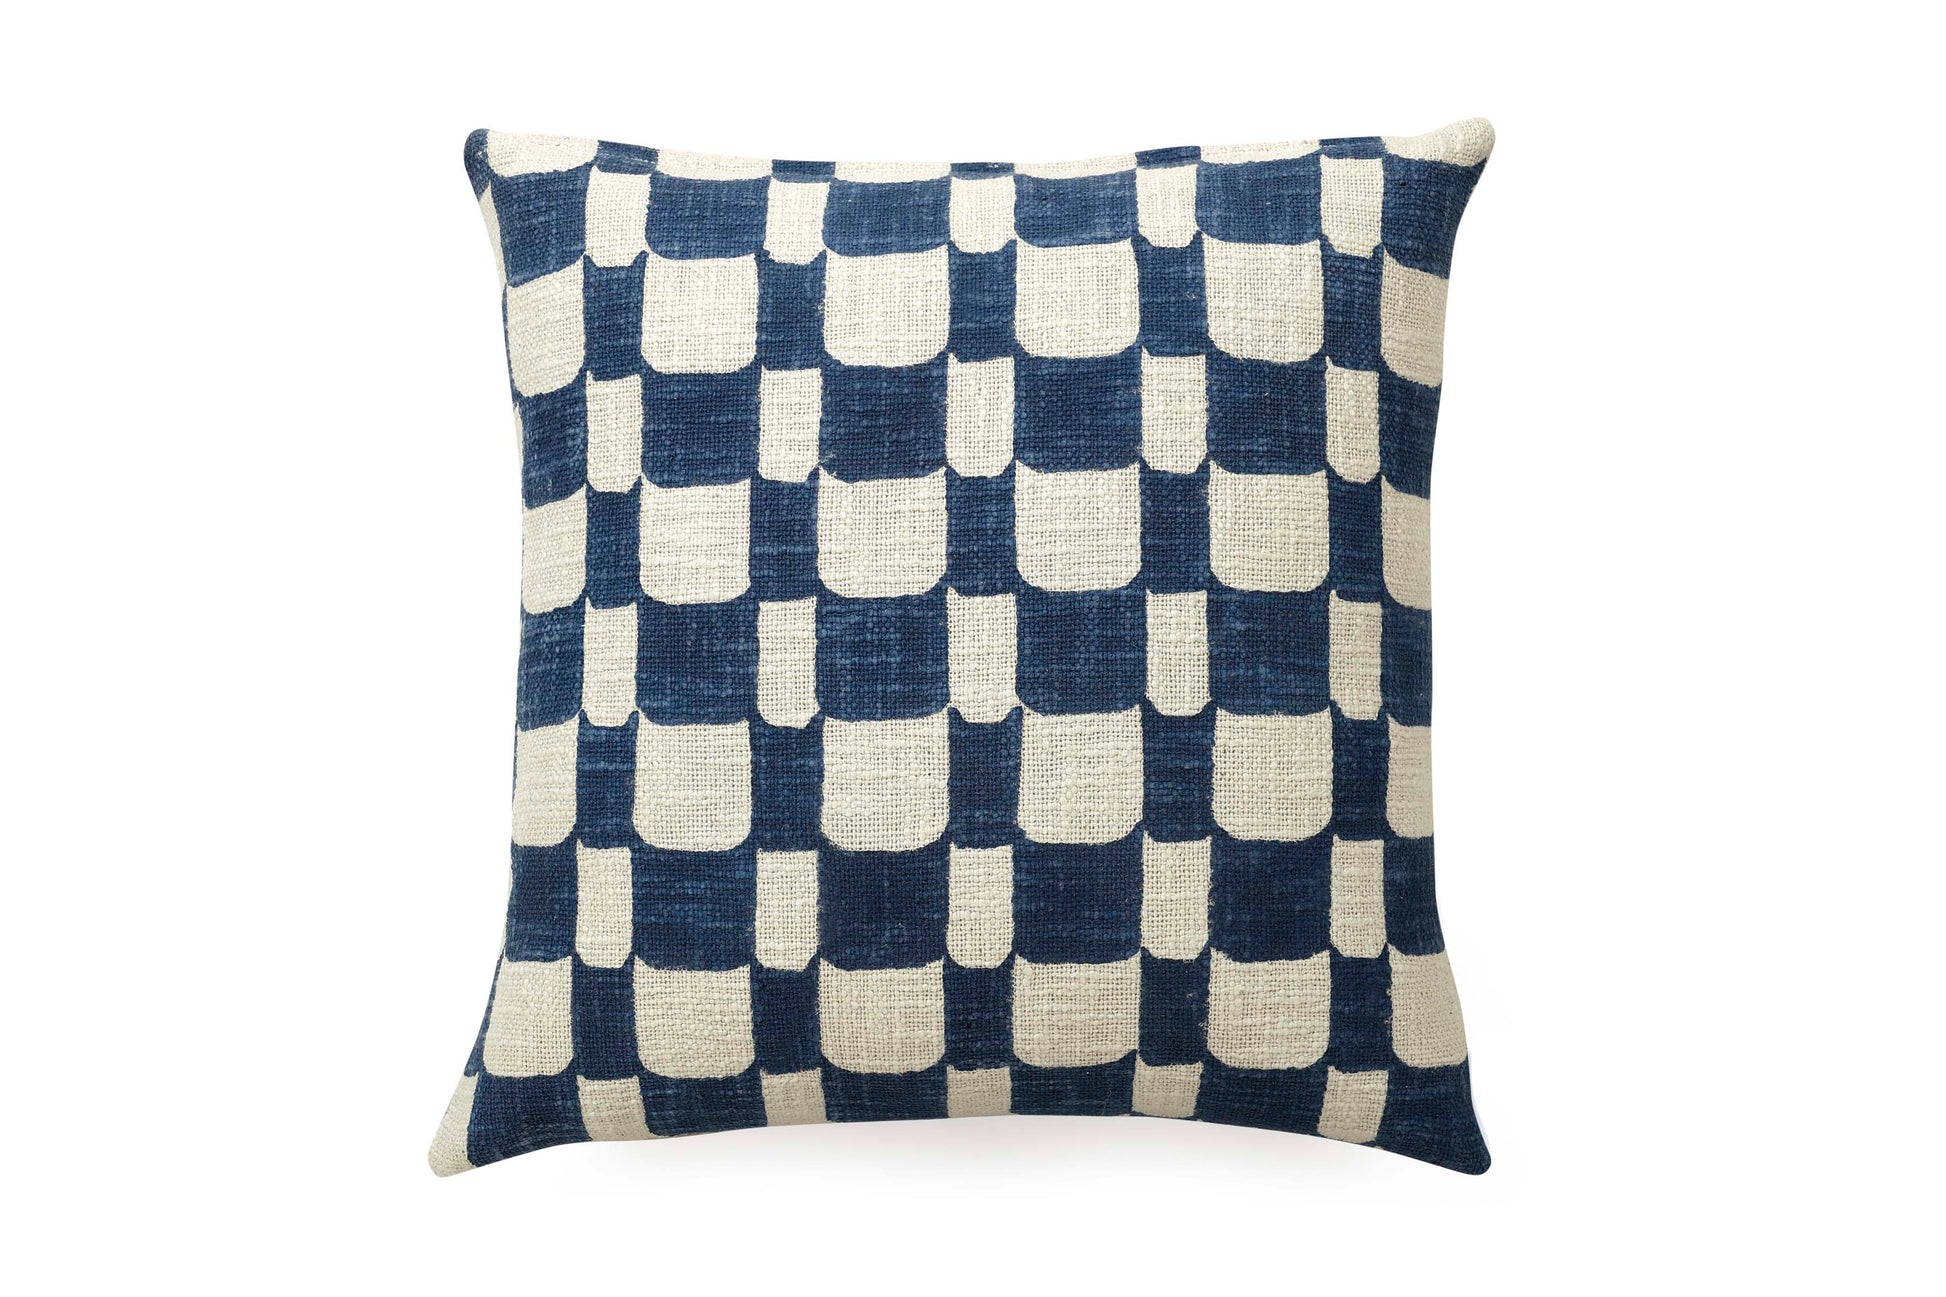 Aaakar Checkered Block Printed Pillow, Indigo - 18x18 inch by The Artisen - Sumiye Co